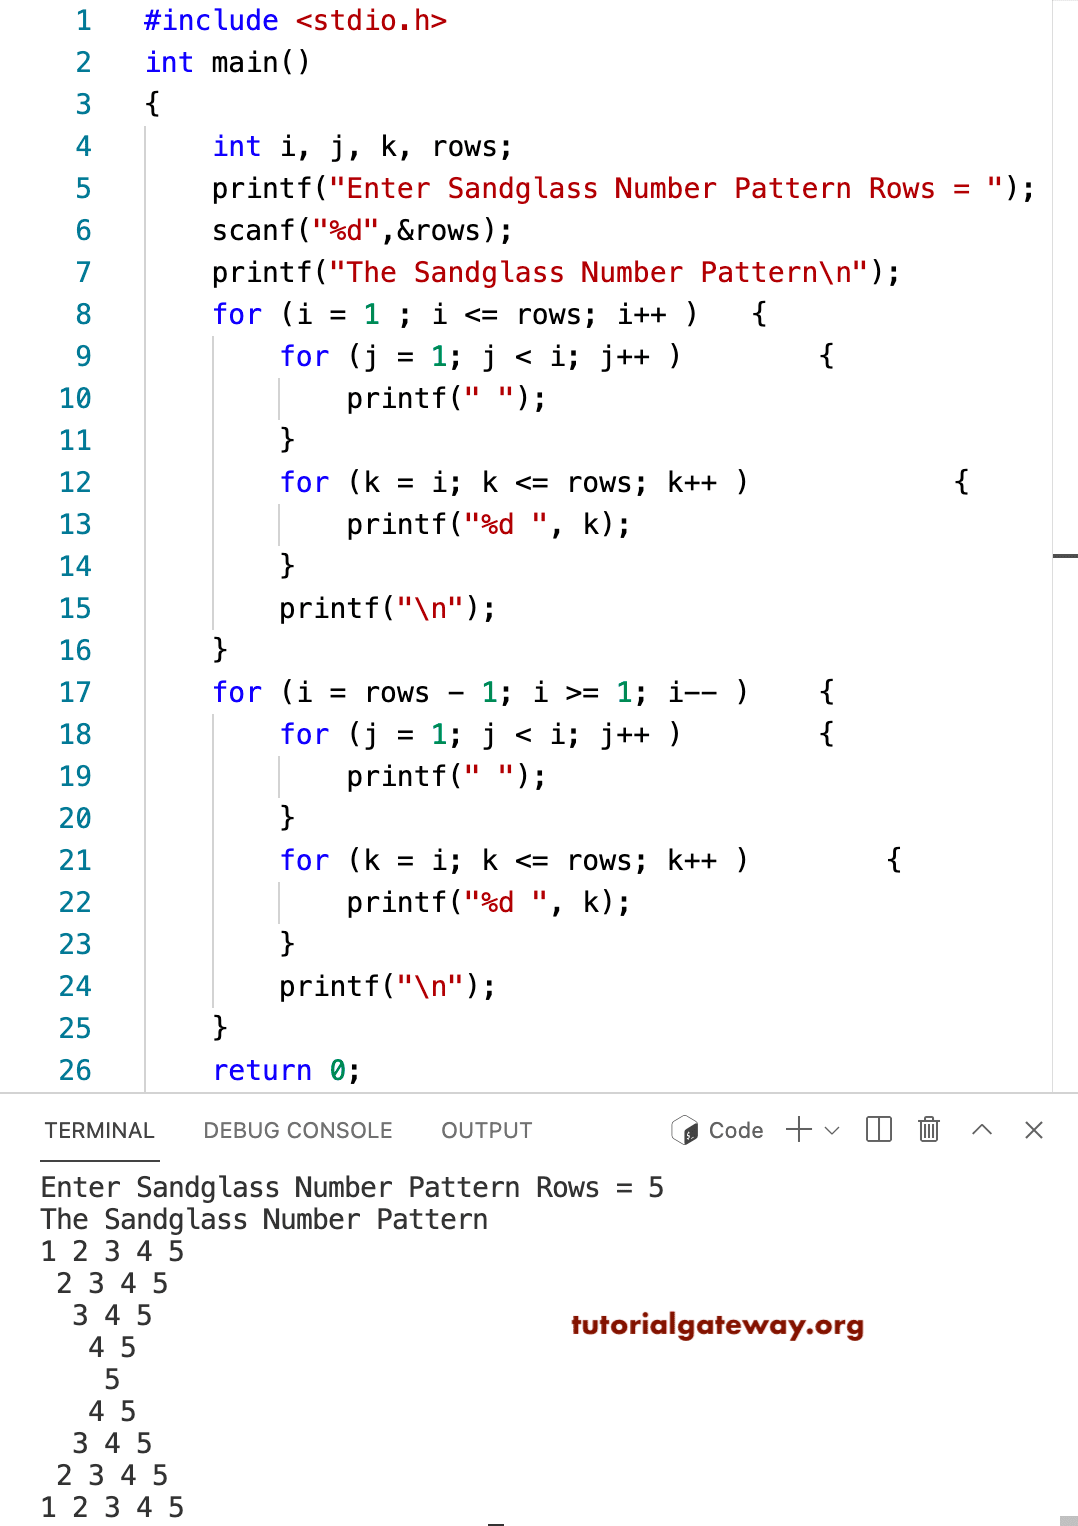 C program to Print Sandglass Number Pattern